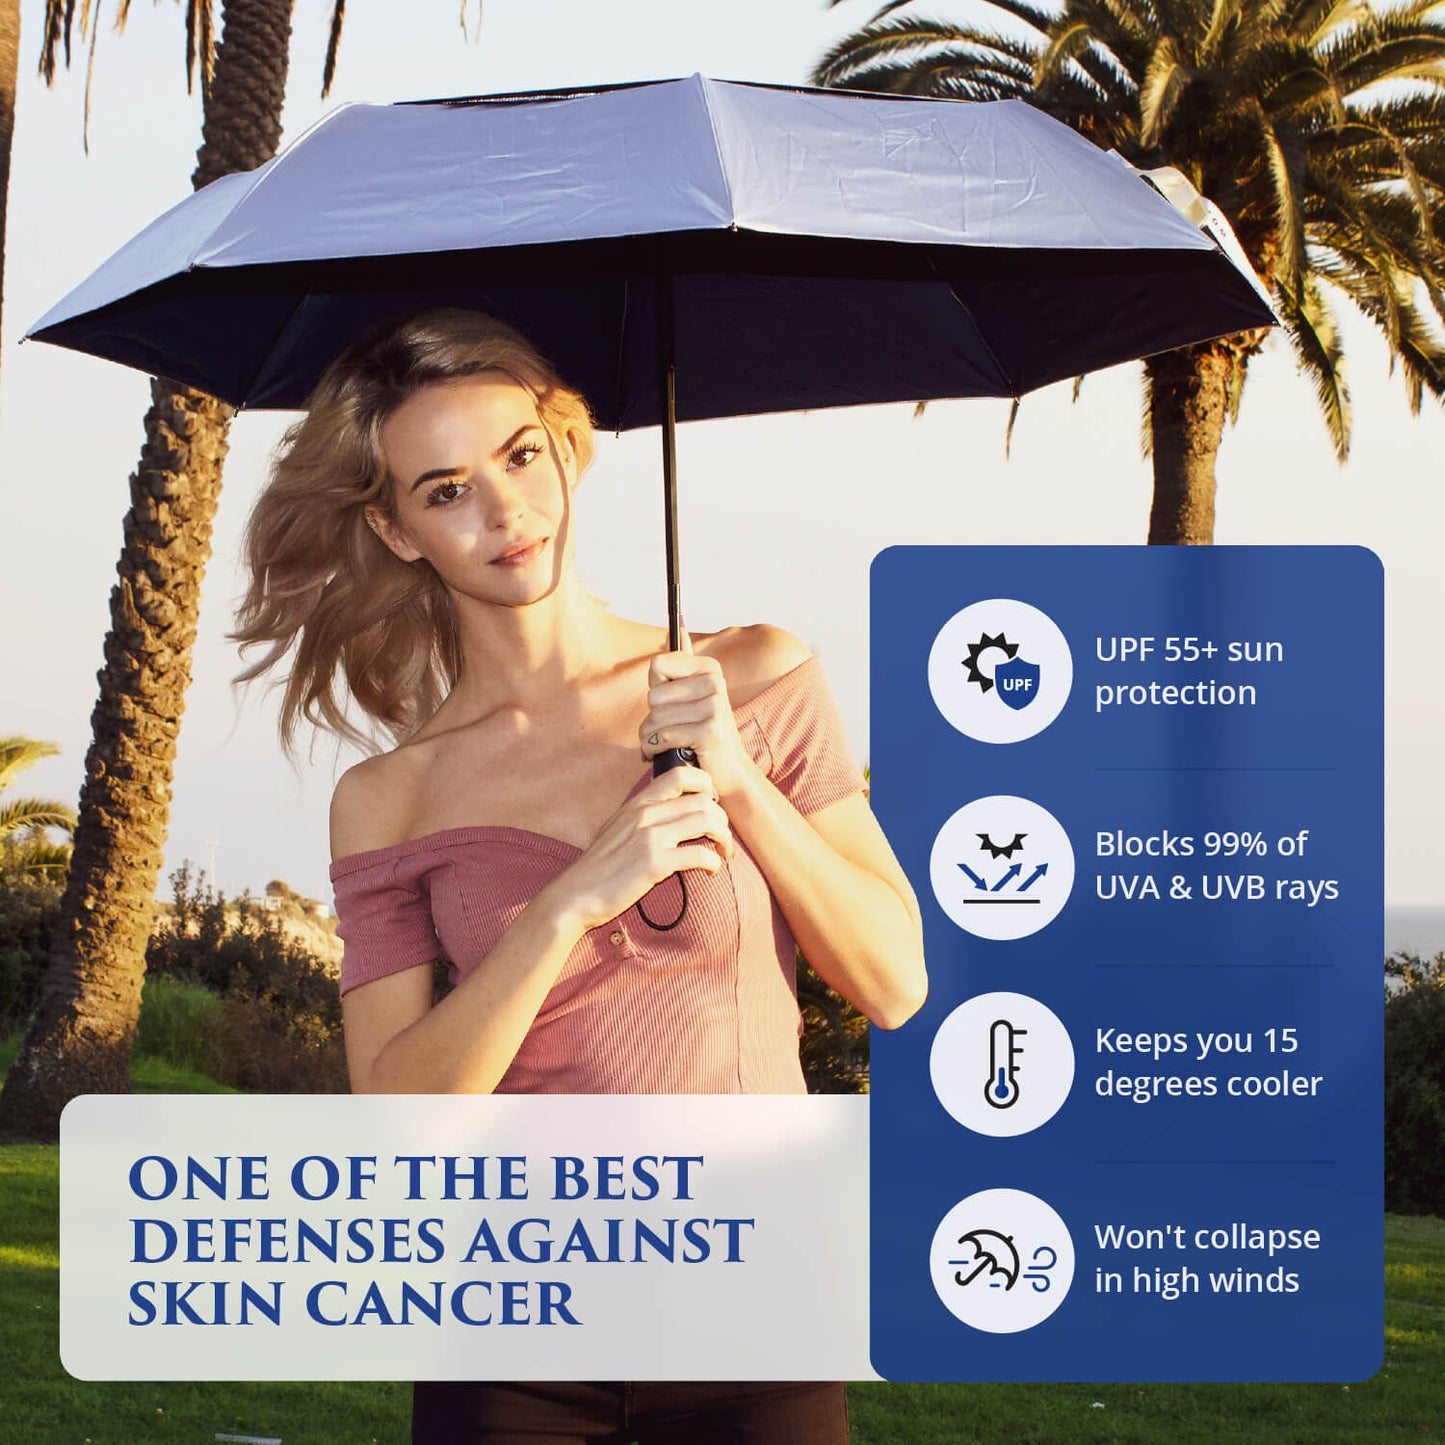 UV-Blocker Golf Sun Umbrella is the Best Defense Against Skin Cancer